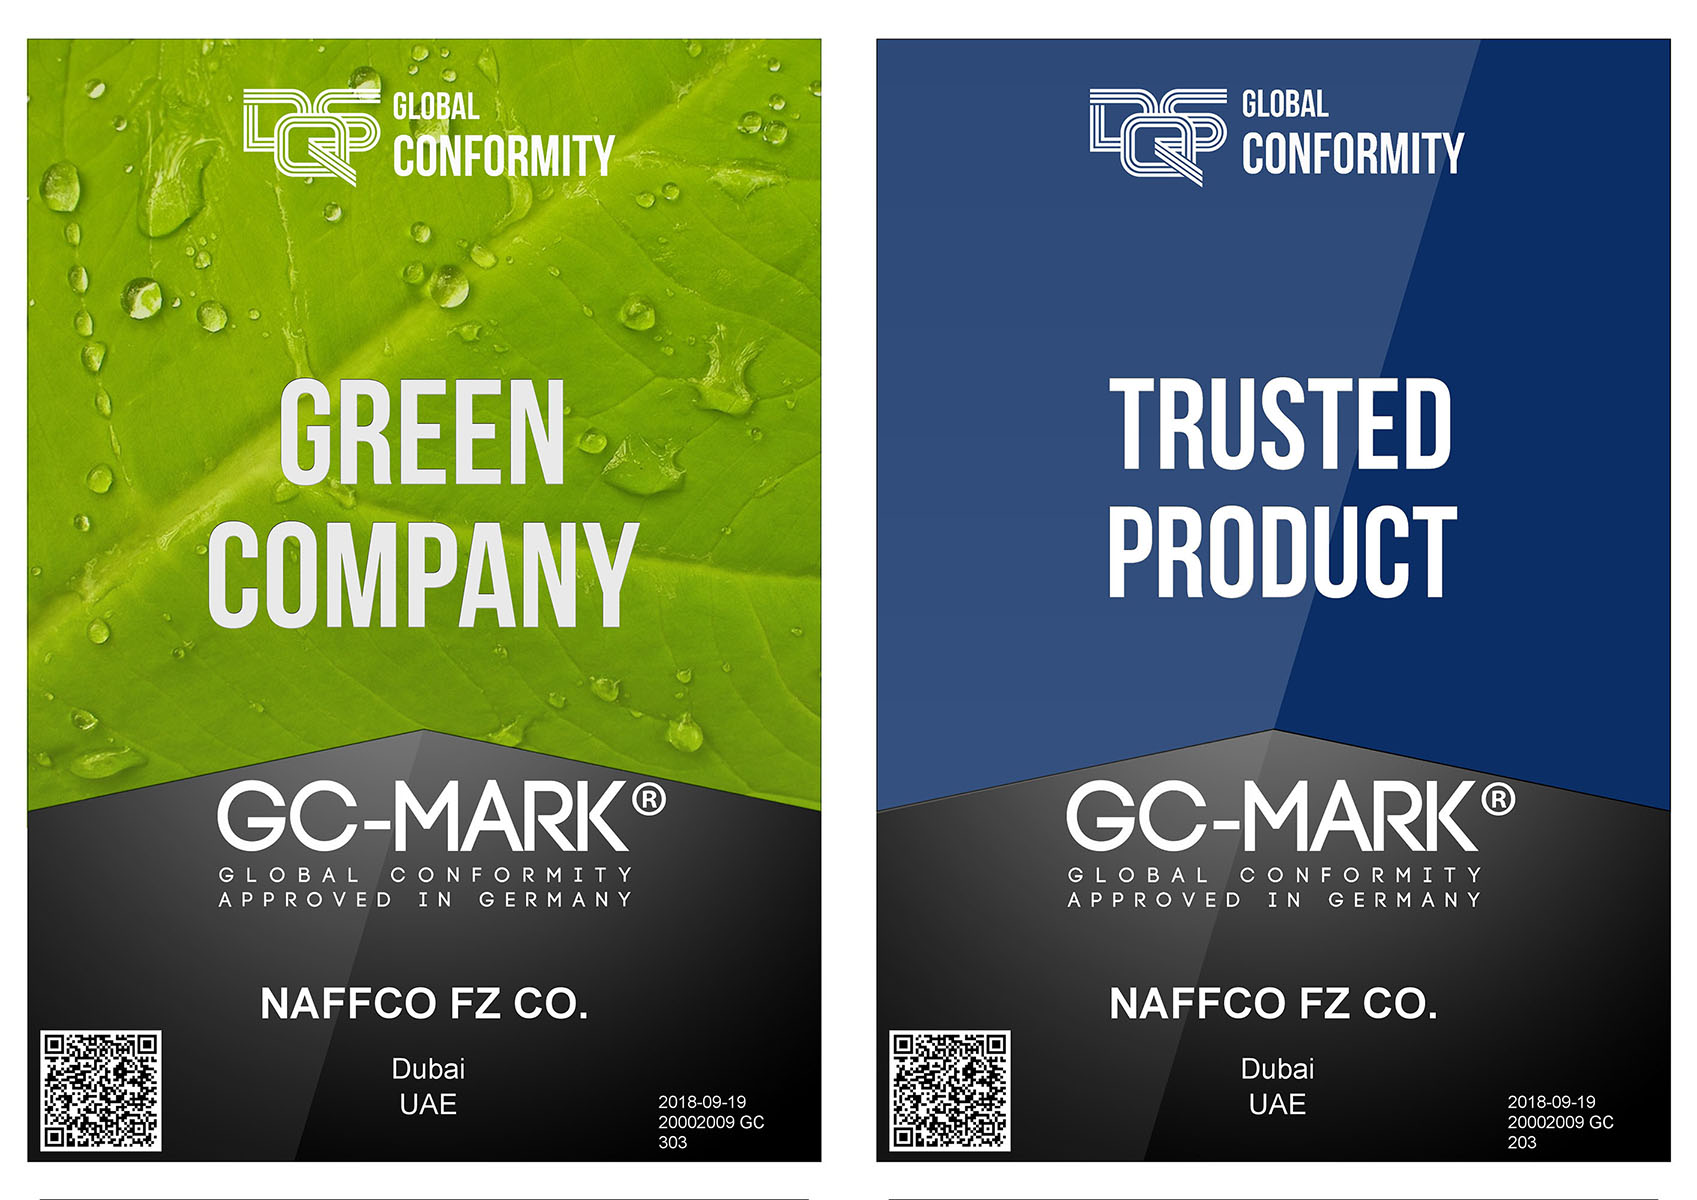 NAFFCO Receives GC-Mark Certification